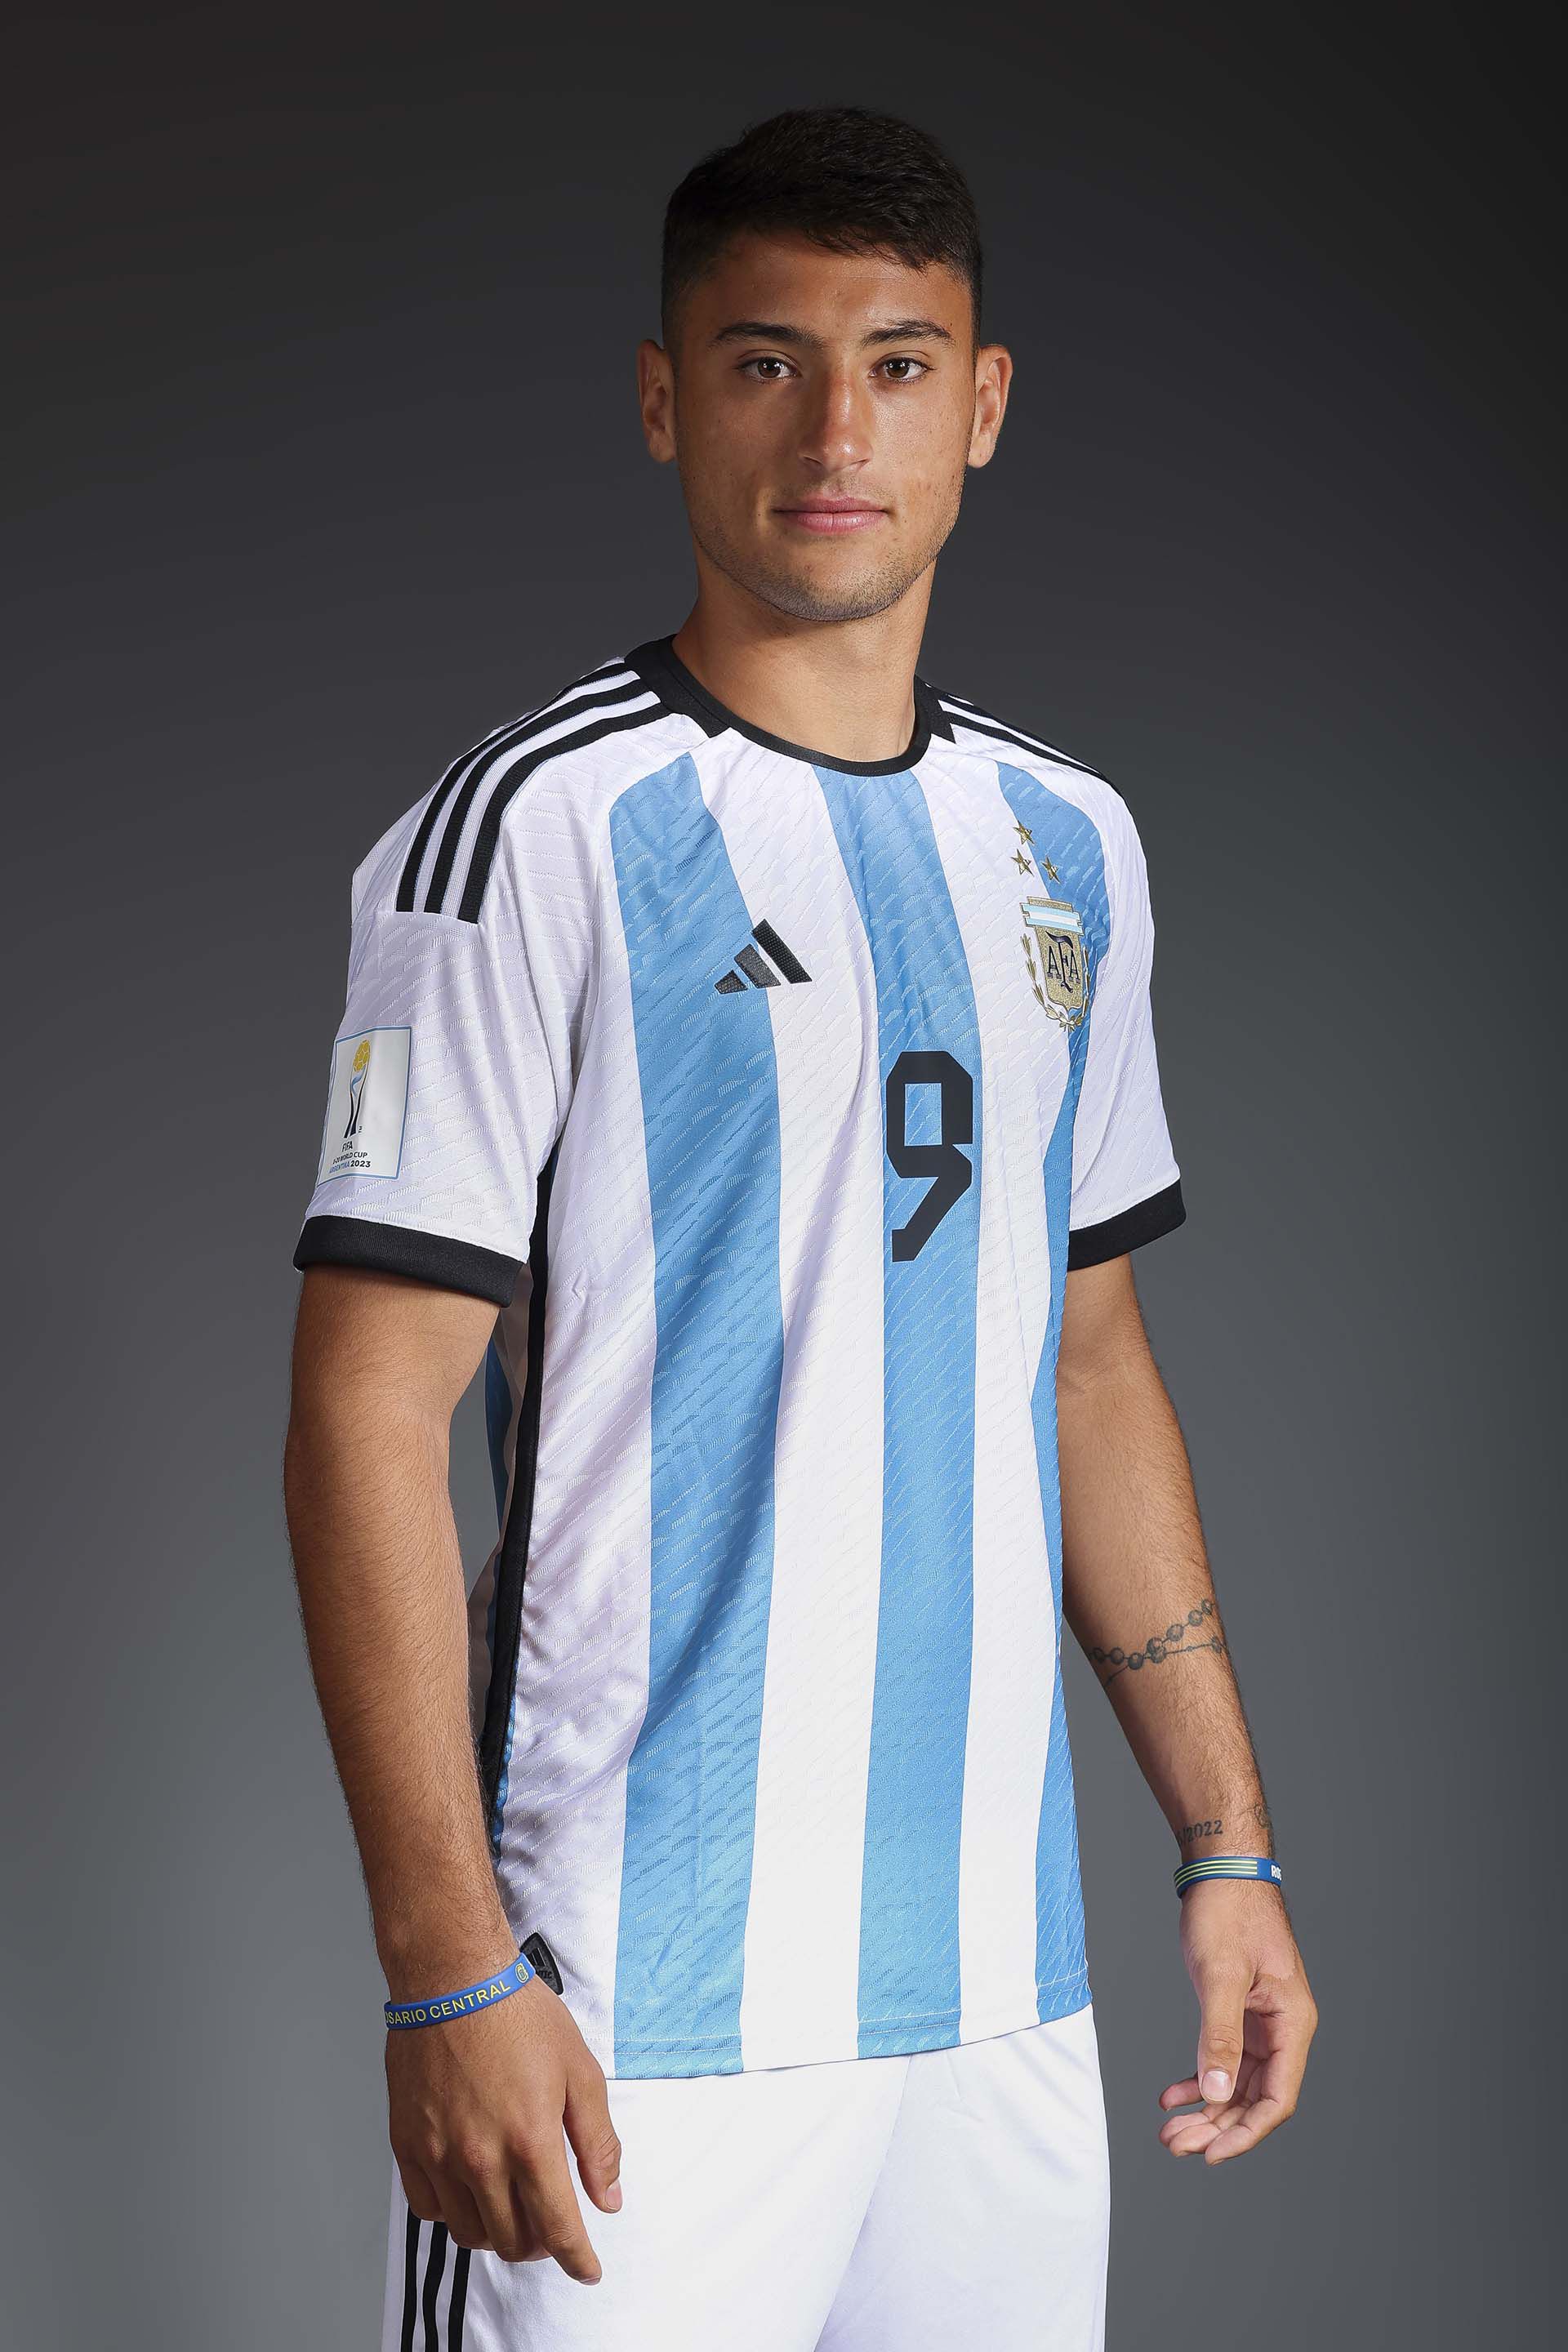 Selección Argentina Sub 20